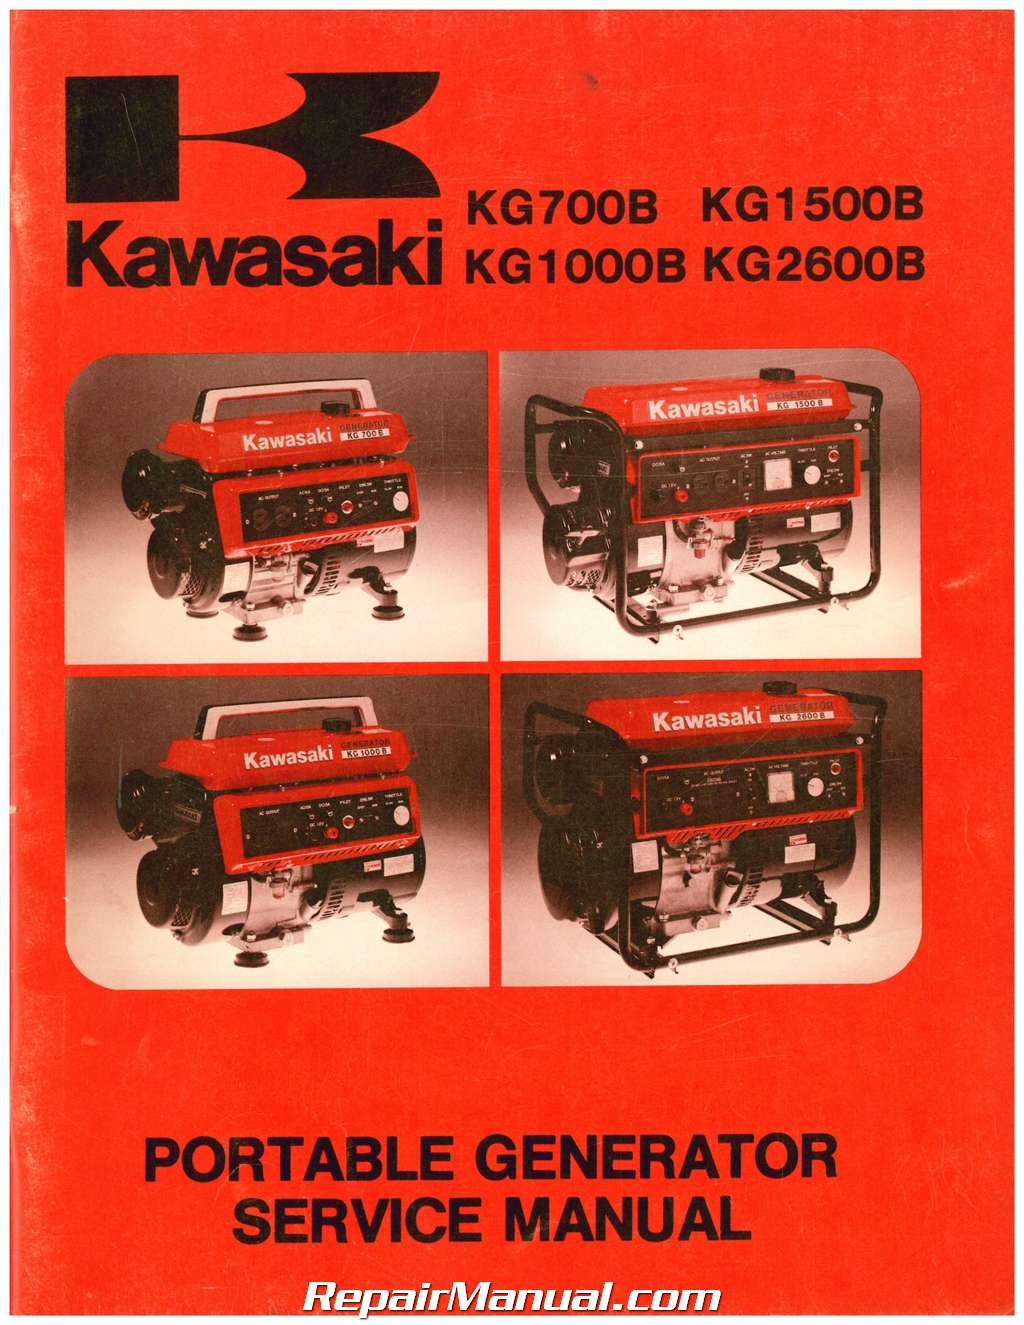 Kawasaki KG700B KG1500B KG1000B Portable Generator Service